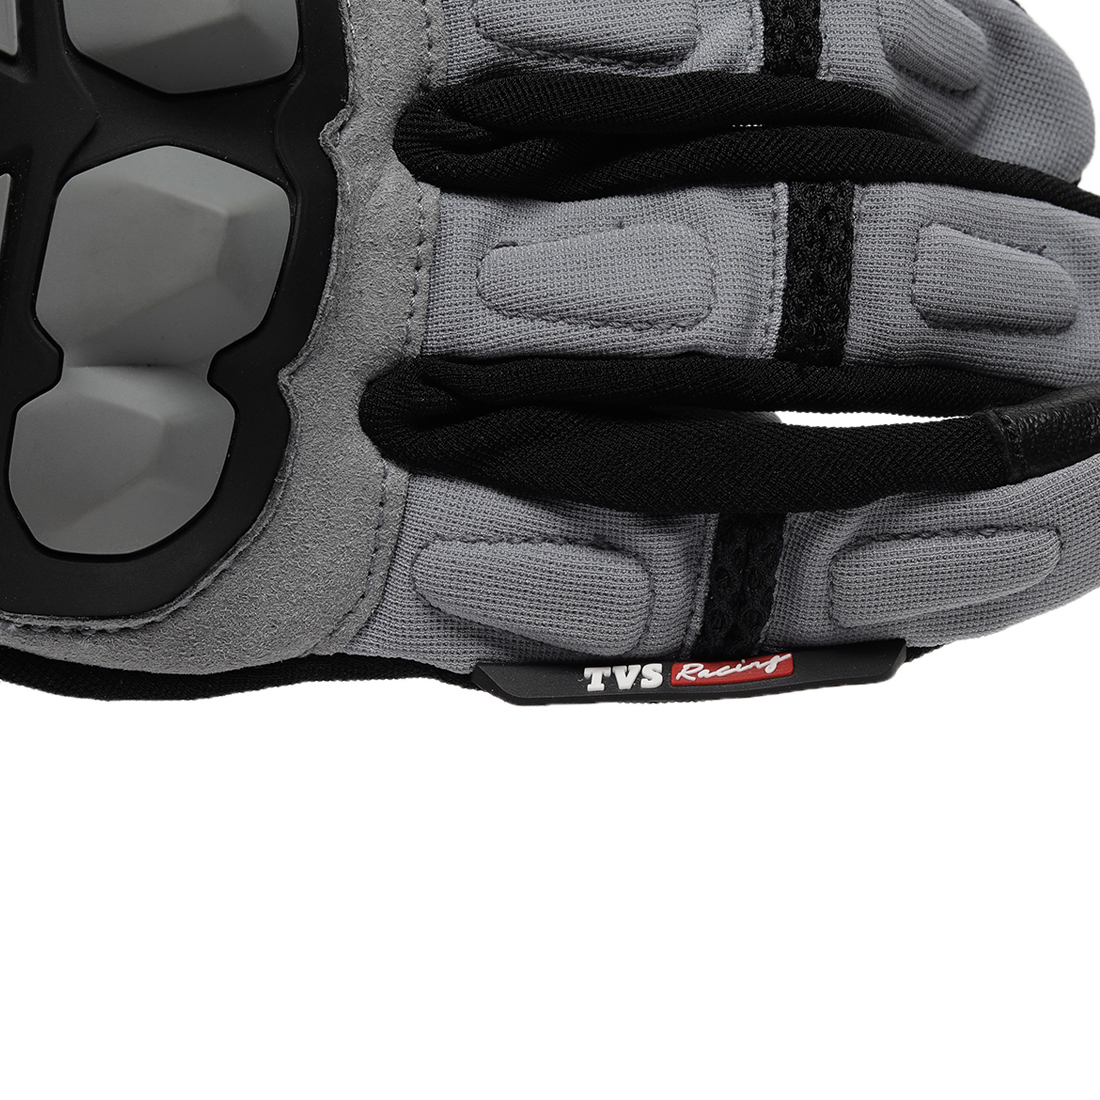  TVS Racing Xplorer Riding Gloves for Men – PVC & Carbon Protected, Touch Screen Compatible, & Visor Wiper Fingertips – Premium Bike Gloves for Riding Comfort (Grey)